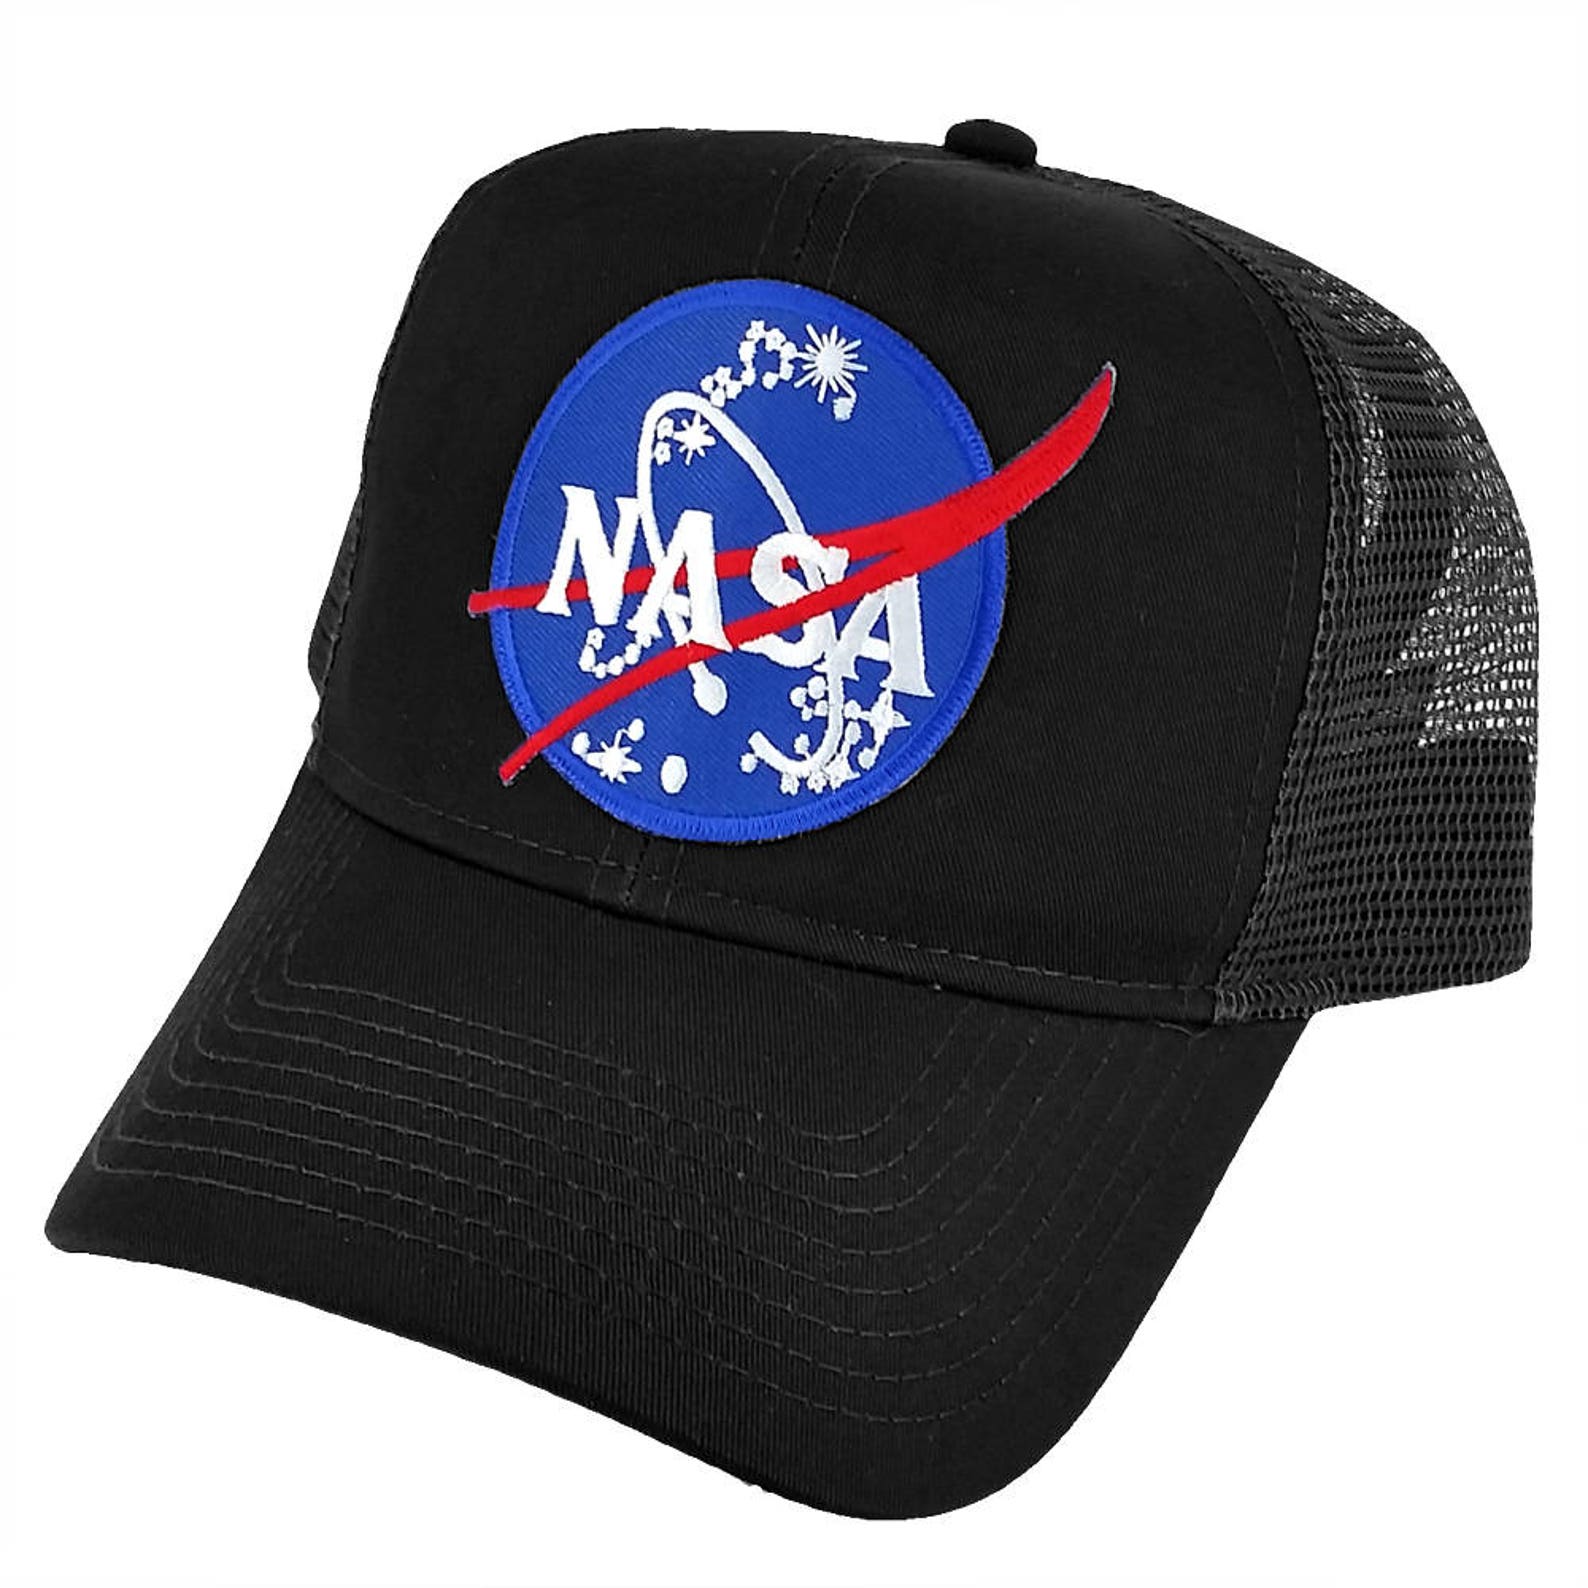 NASA OFFICIAL Emblem Insignia Logo Patch Black Mesh Snapback | Etsy